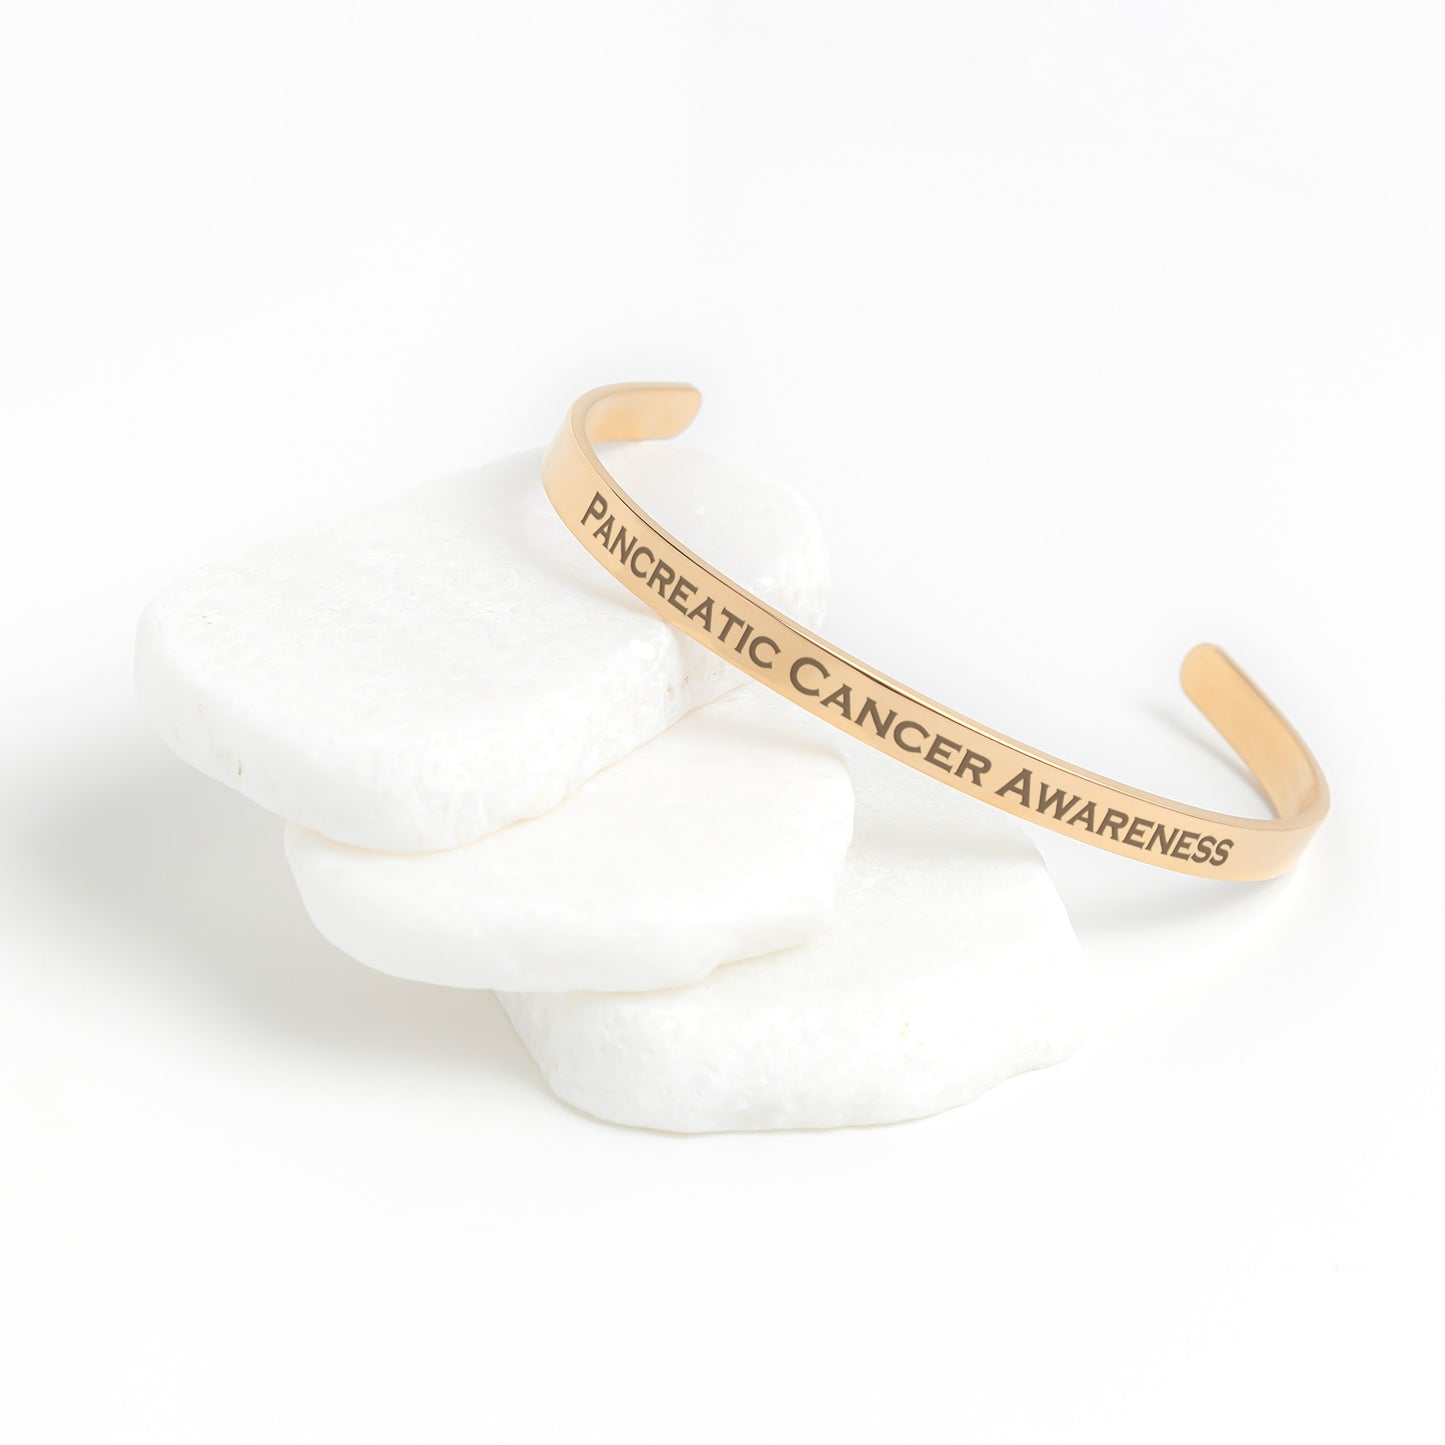 Personalized Pancreatic Cancer Awareness Cuff Bracelet